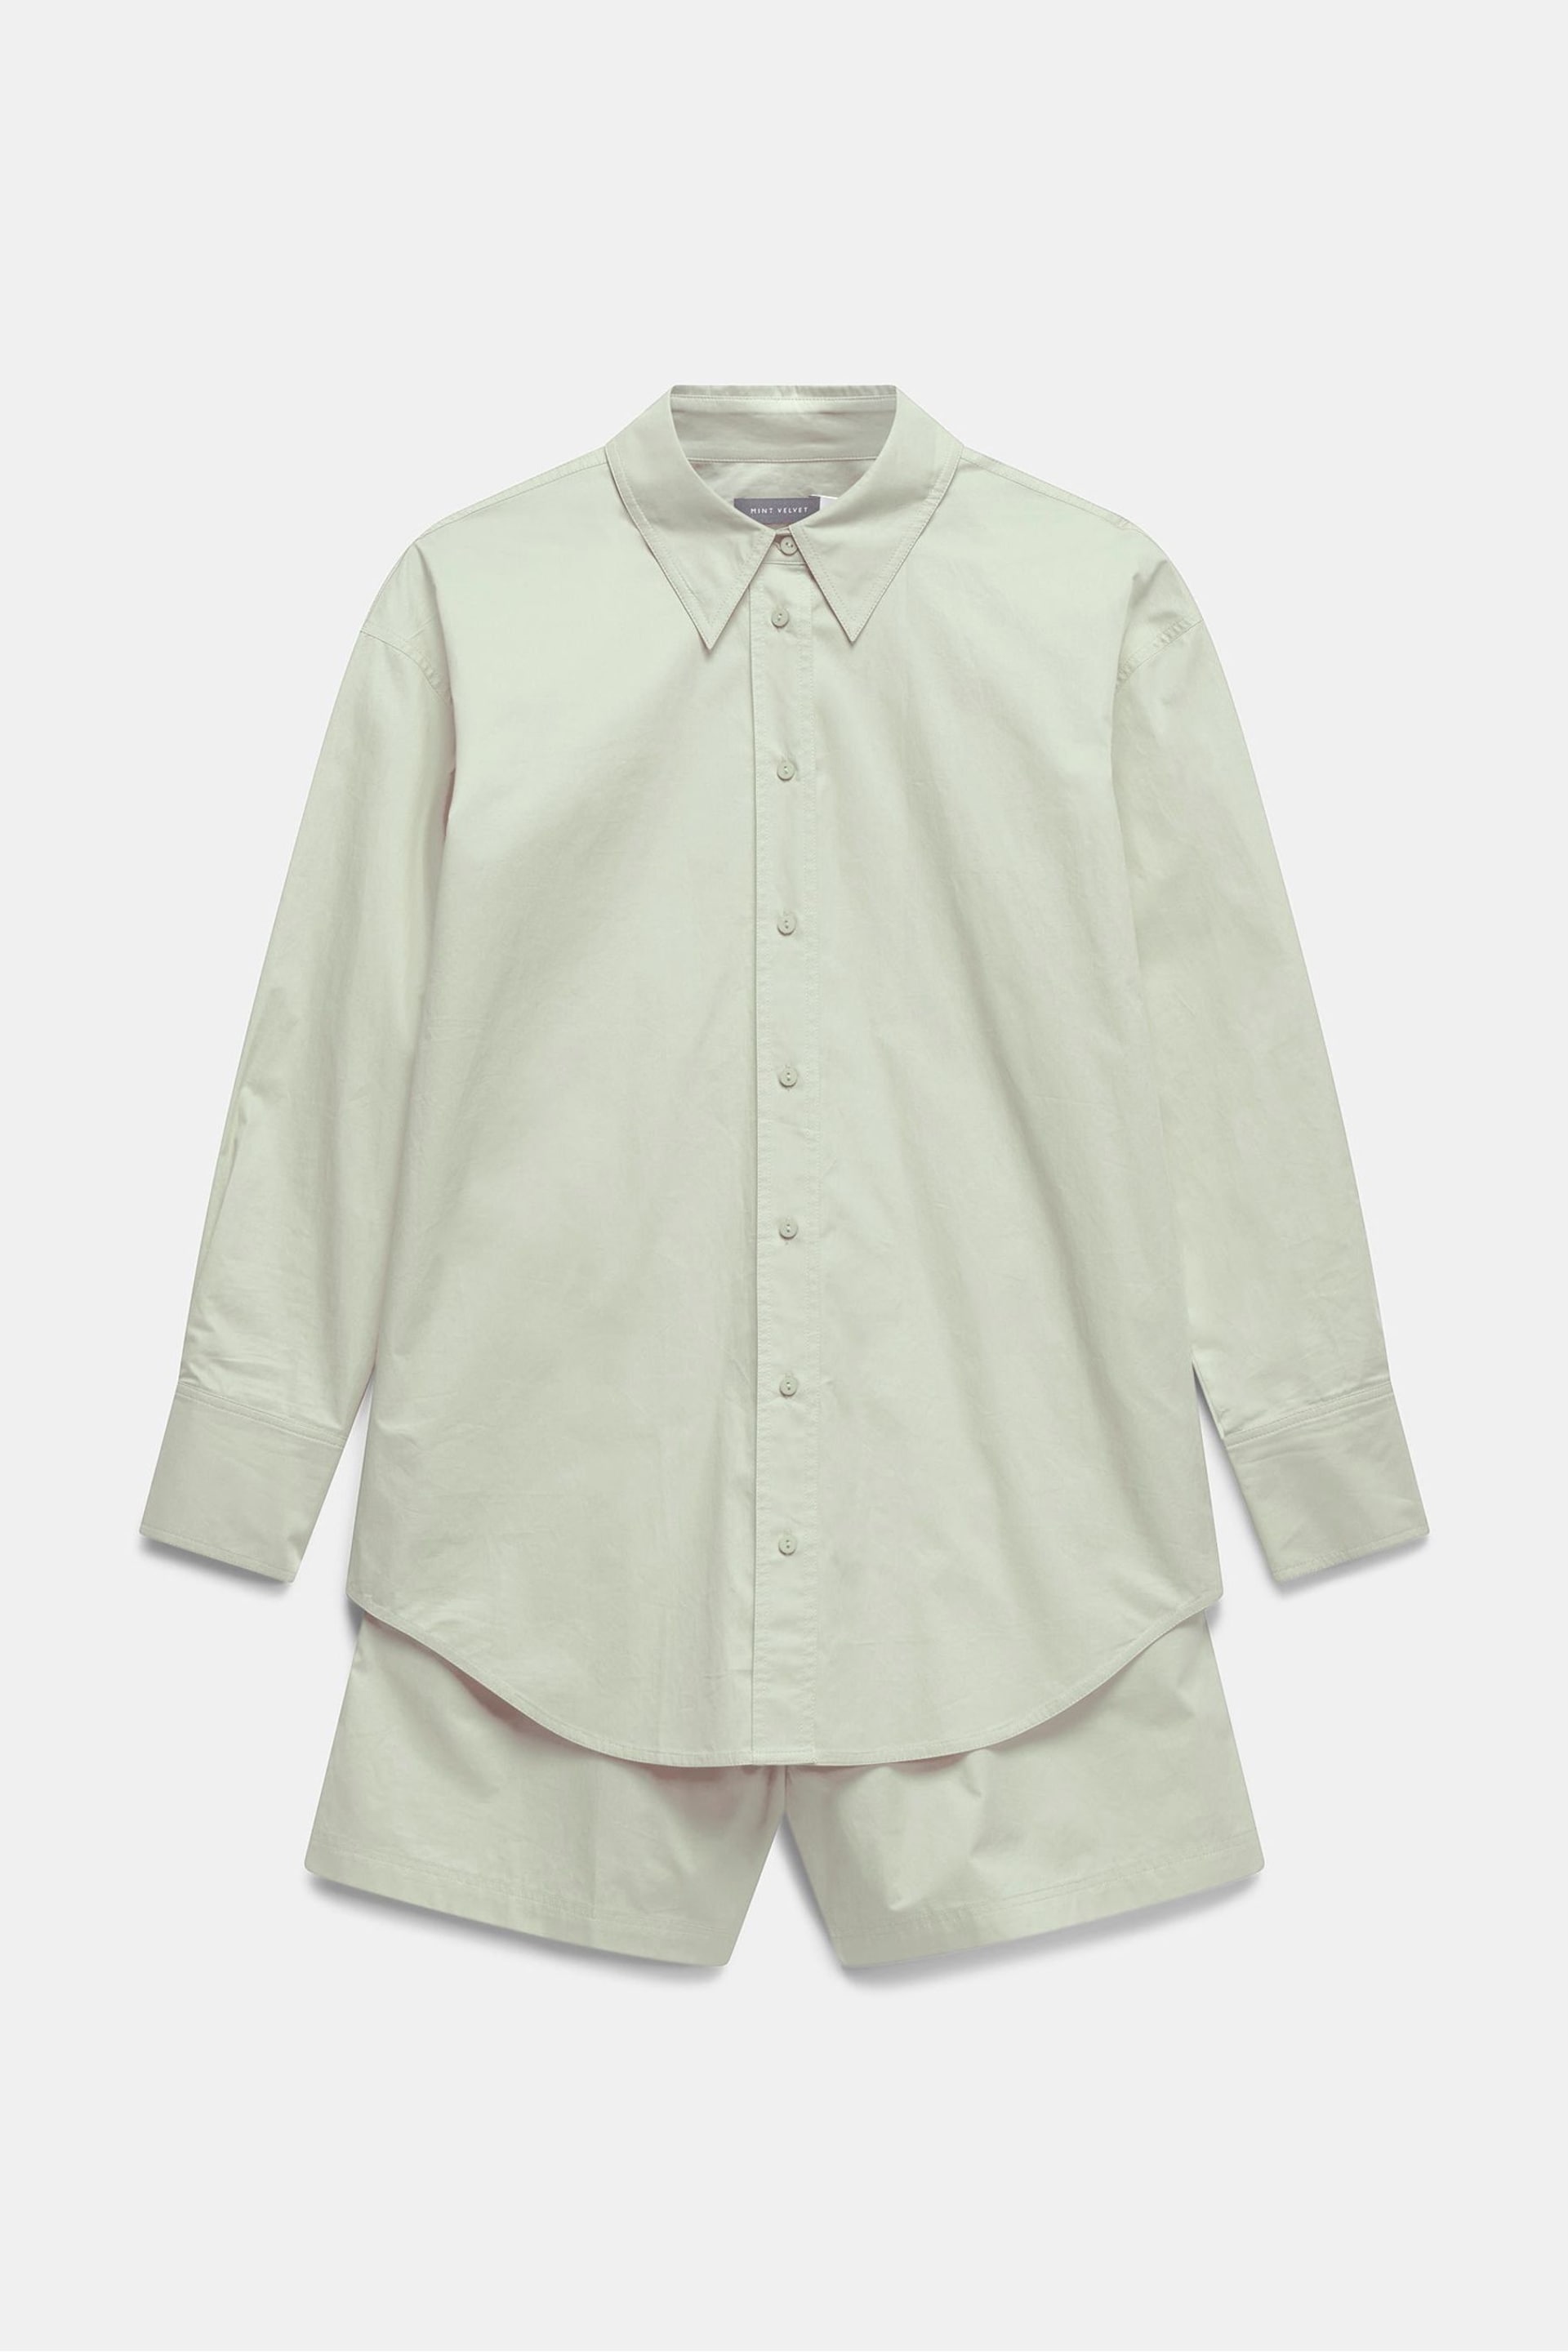 Mint Velvet Green Cotton Shirt & Shorts Set - Image 2 of 3